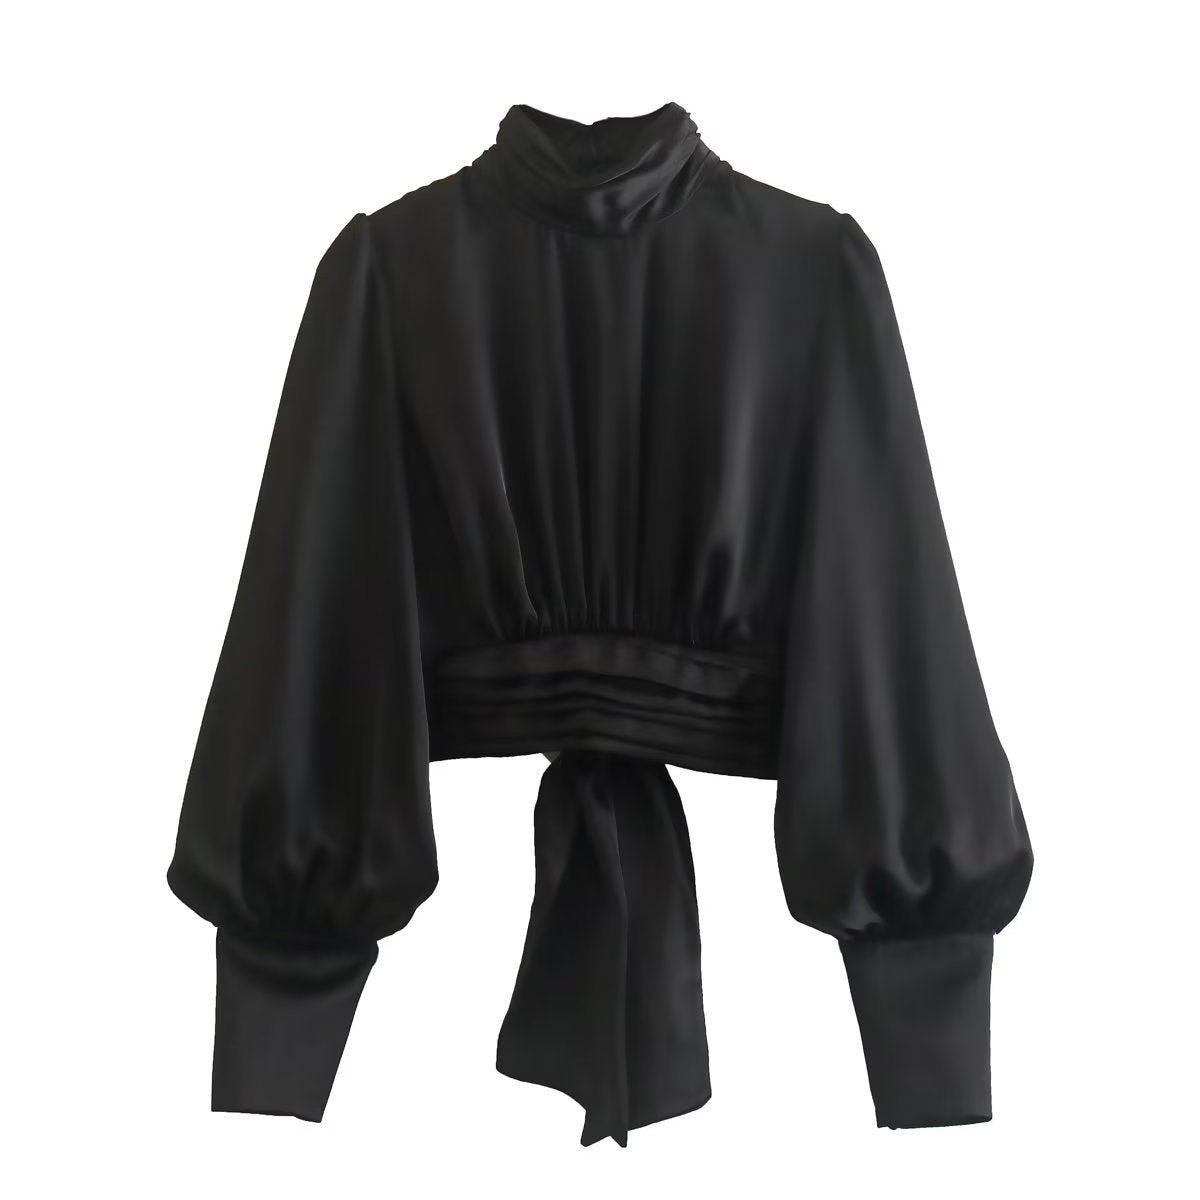 Black Satin Summer Short Blouses for Women-Shirts & Tops-Black-S-Free Shipping at meselling99